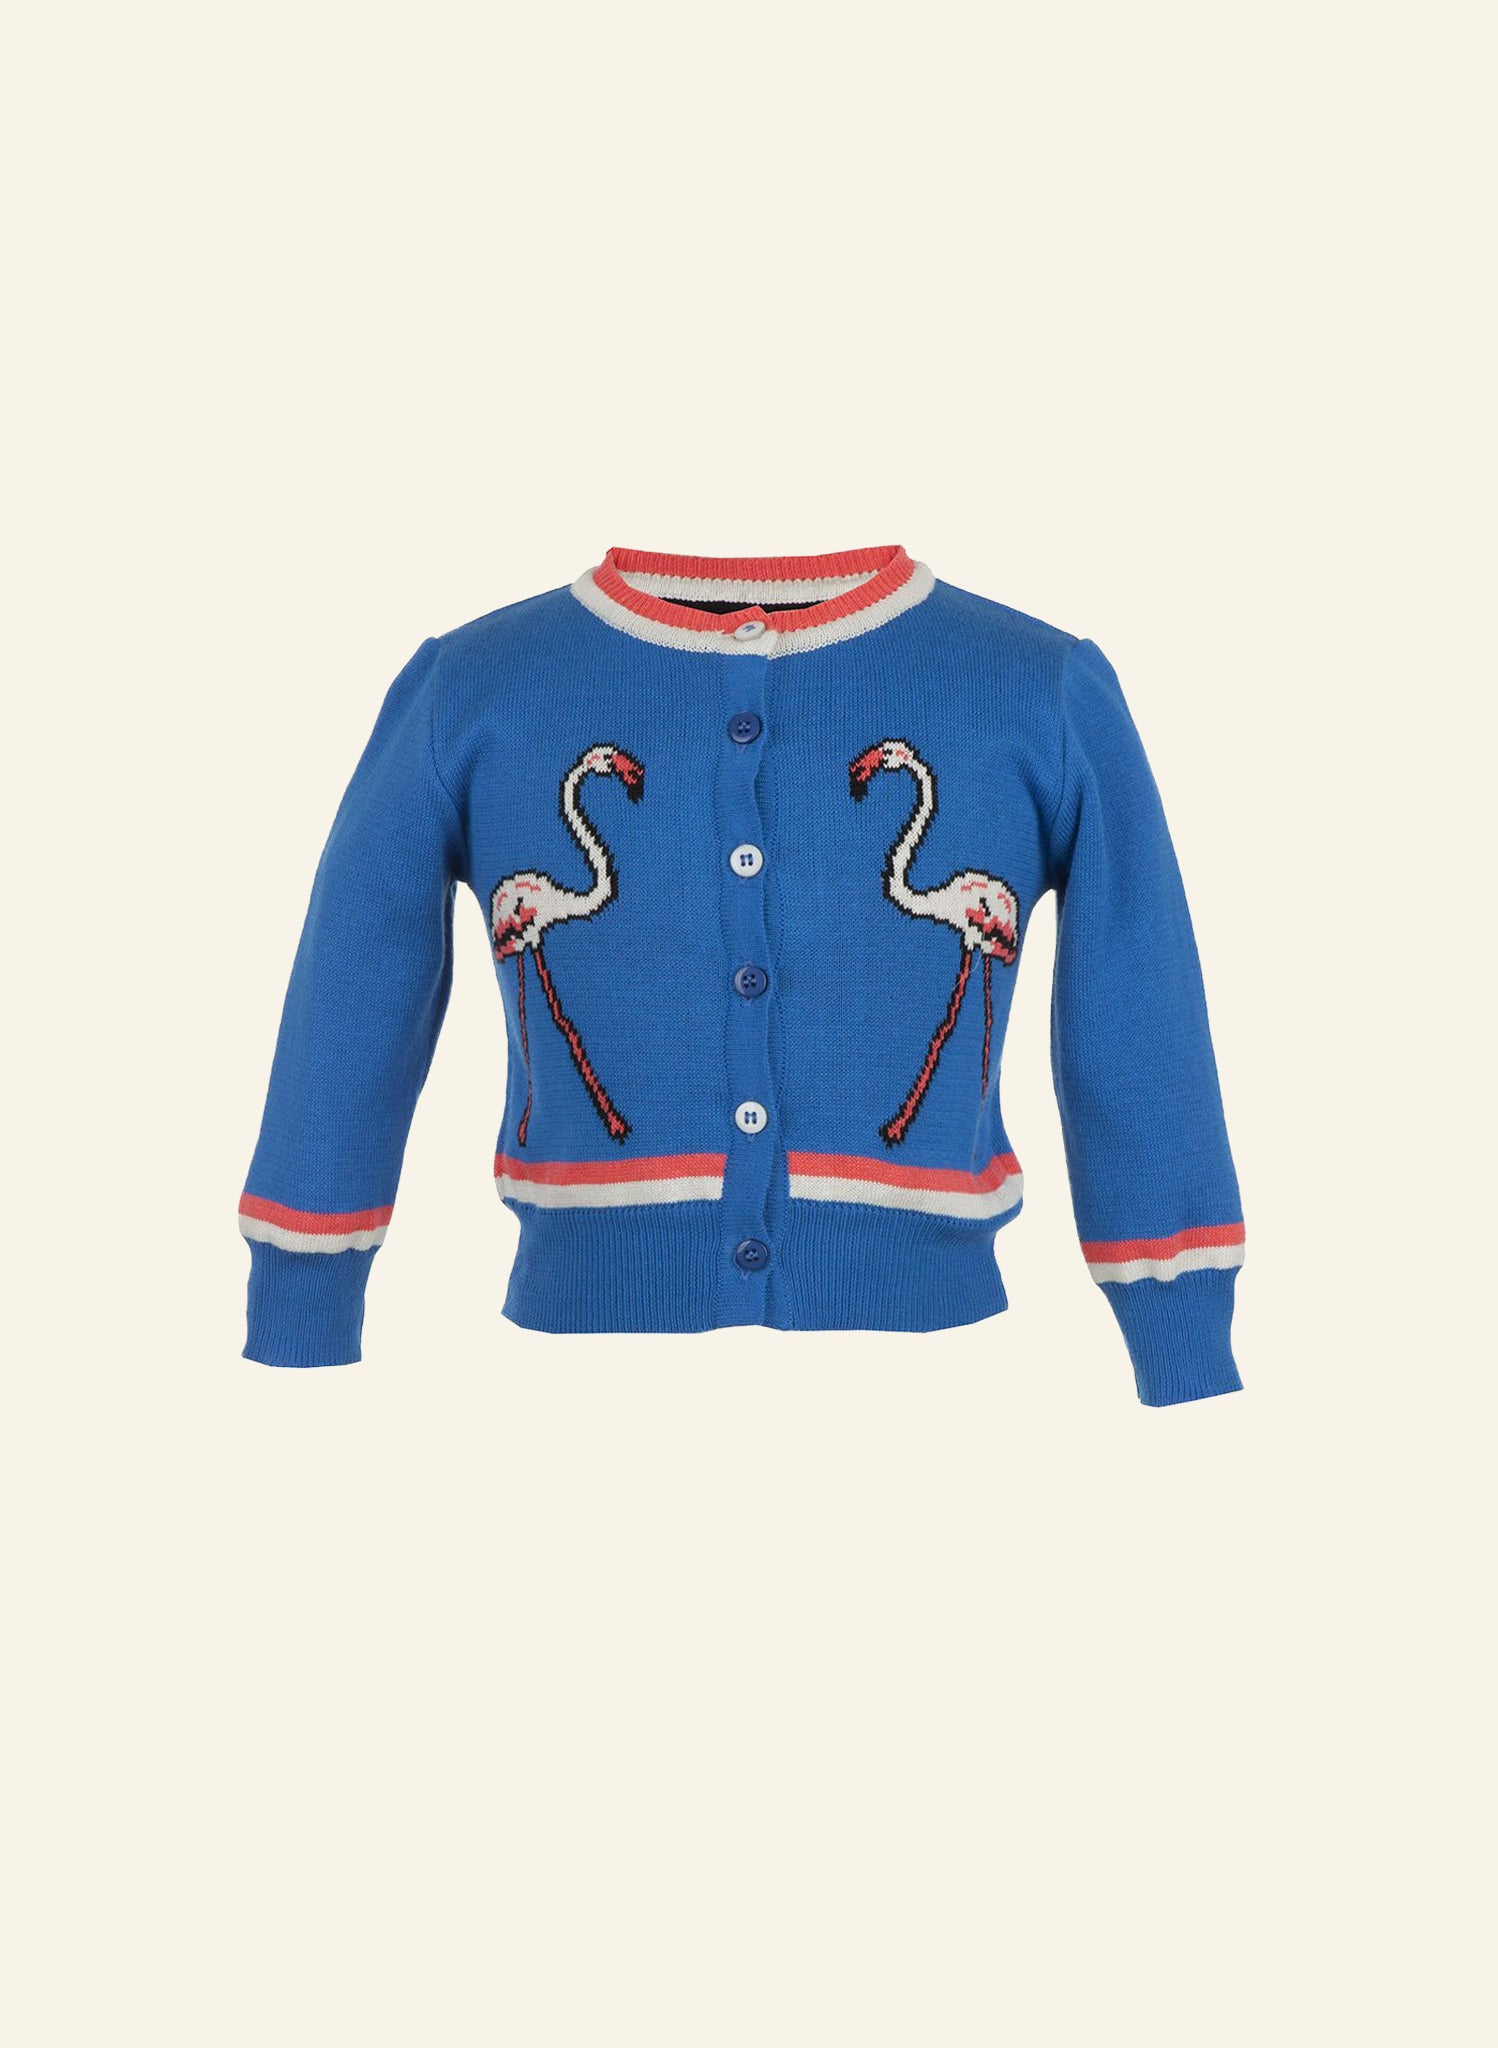 Children's Blue Cardigan | Embroidered Flamingos | 100% Cotton